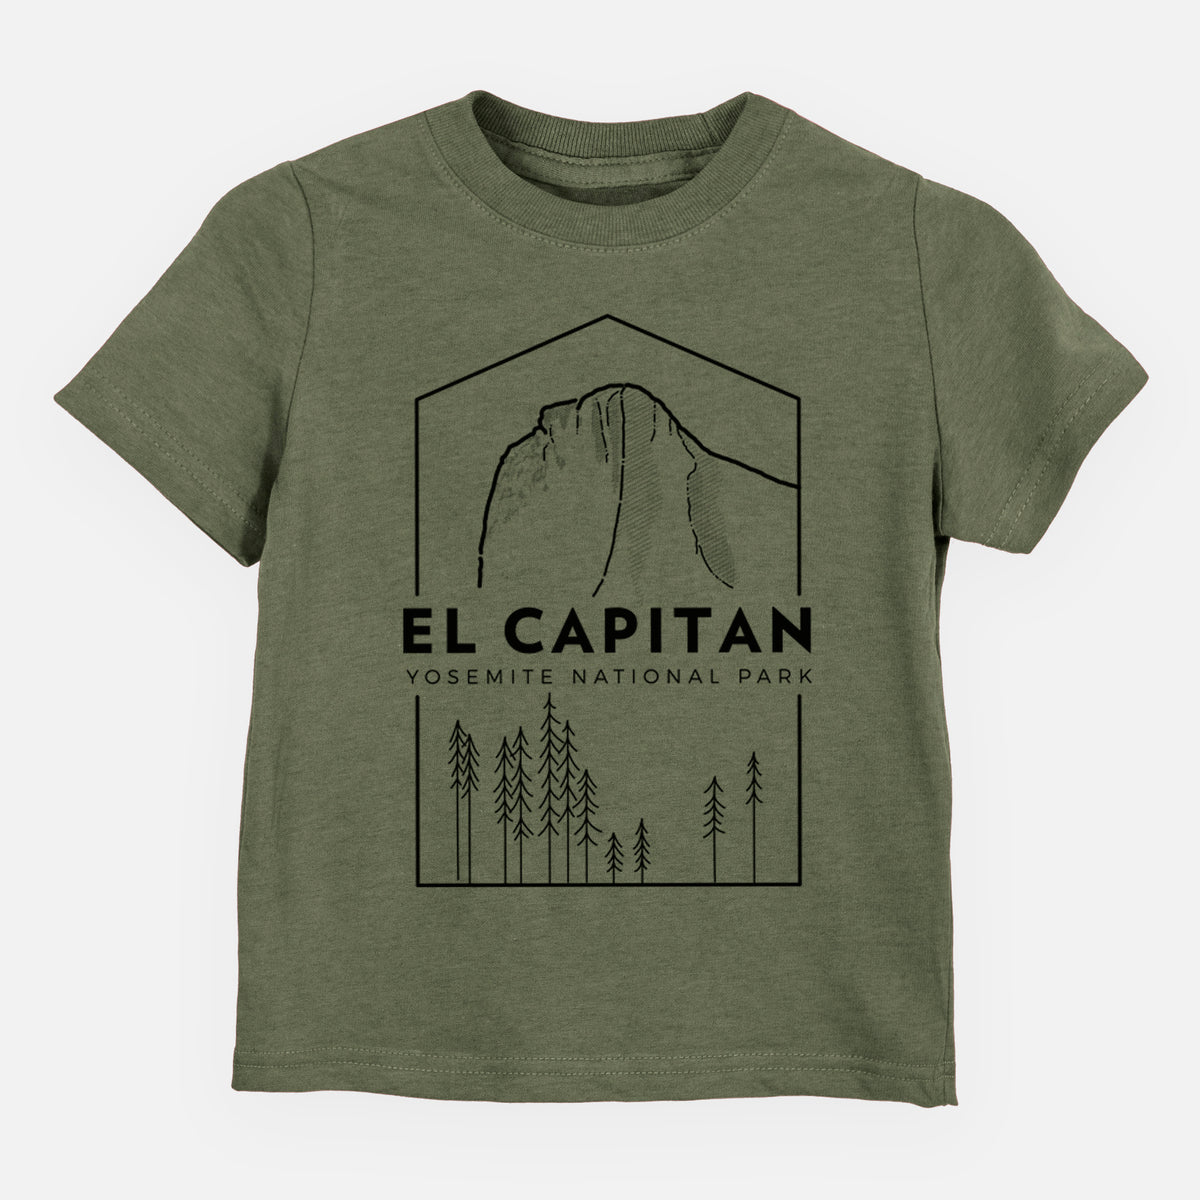 El Capitan - Yosemite National Park - Kids Shirt